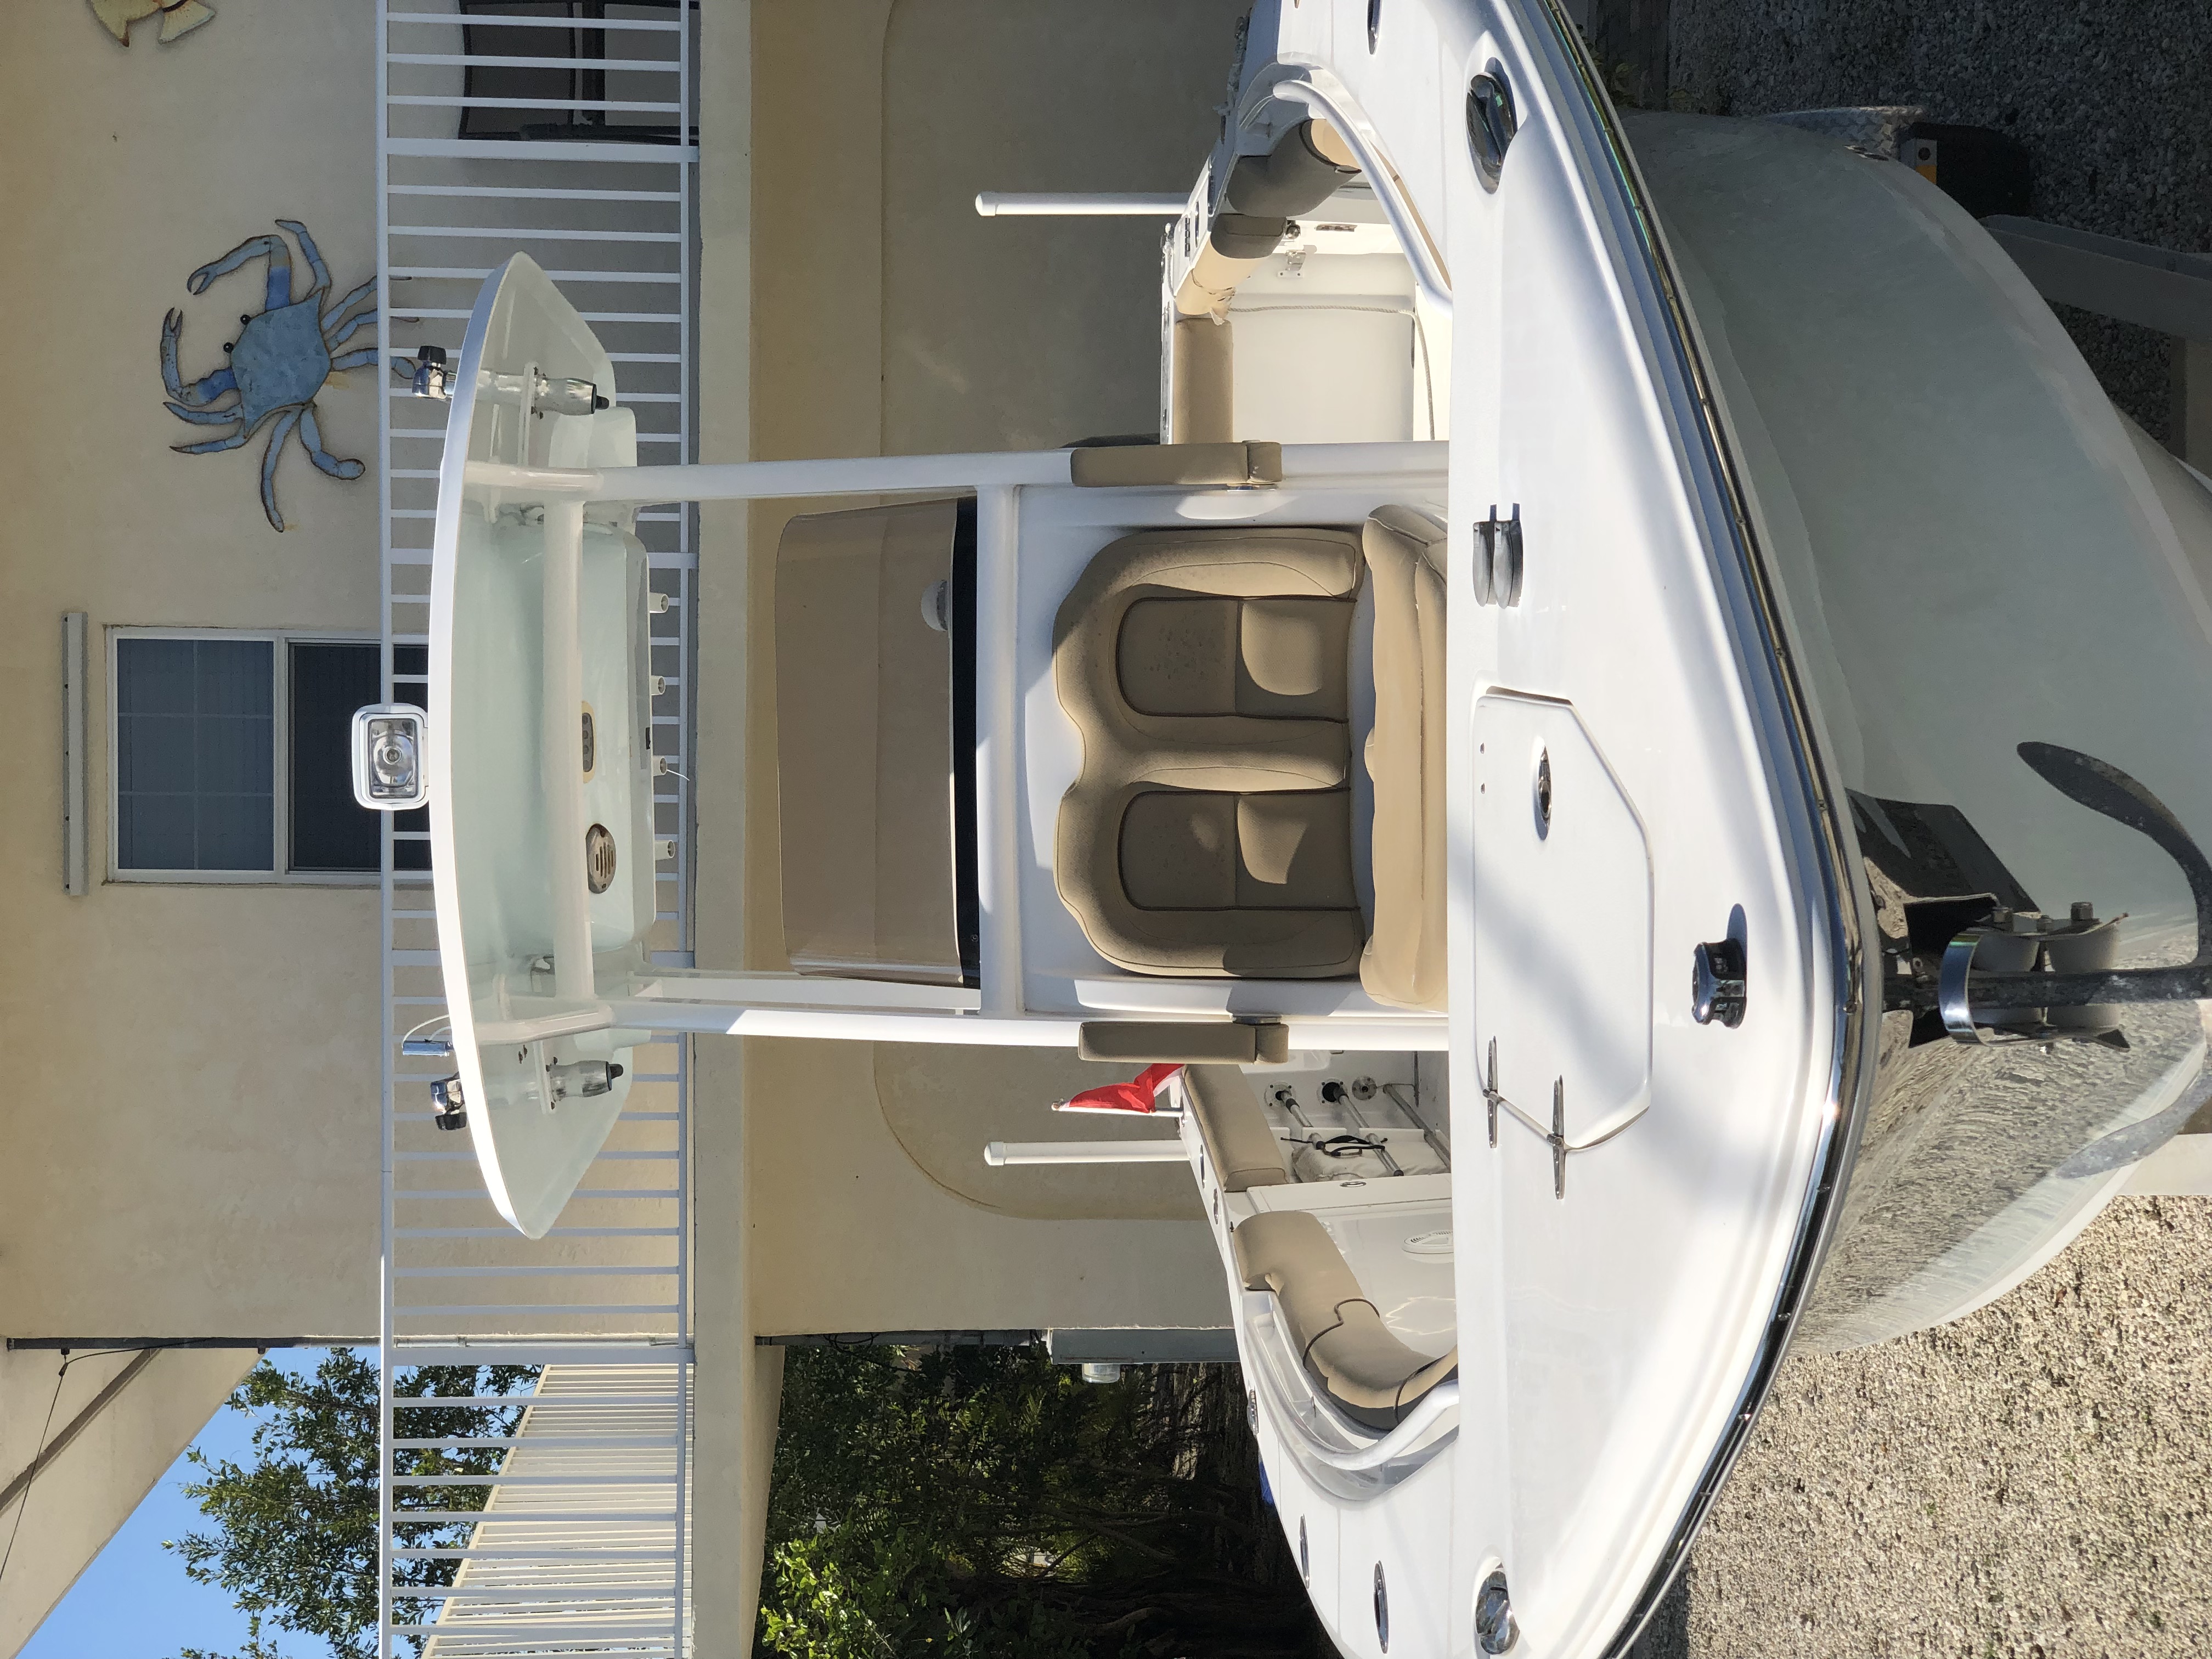 2016 Sea Hunt Gamefish 27CB Power boat for sale in Ramrod Key, FL - image 5 